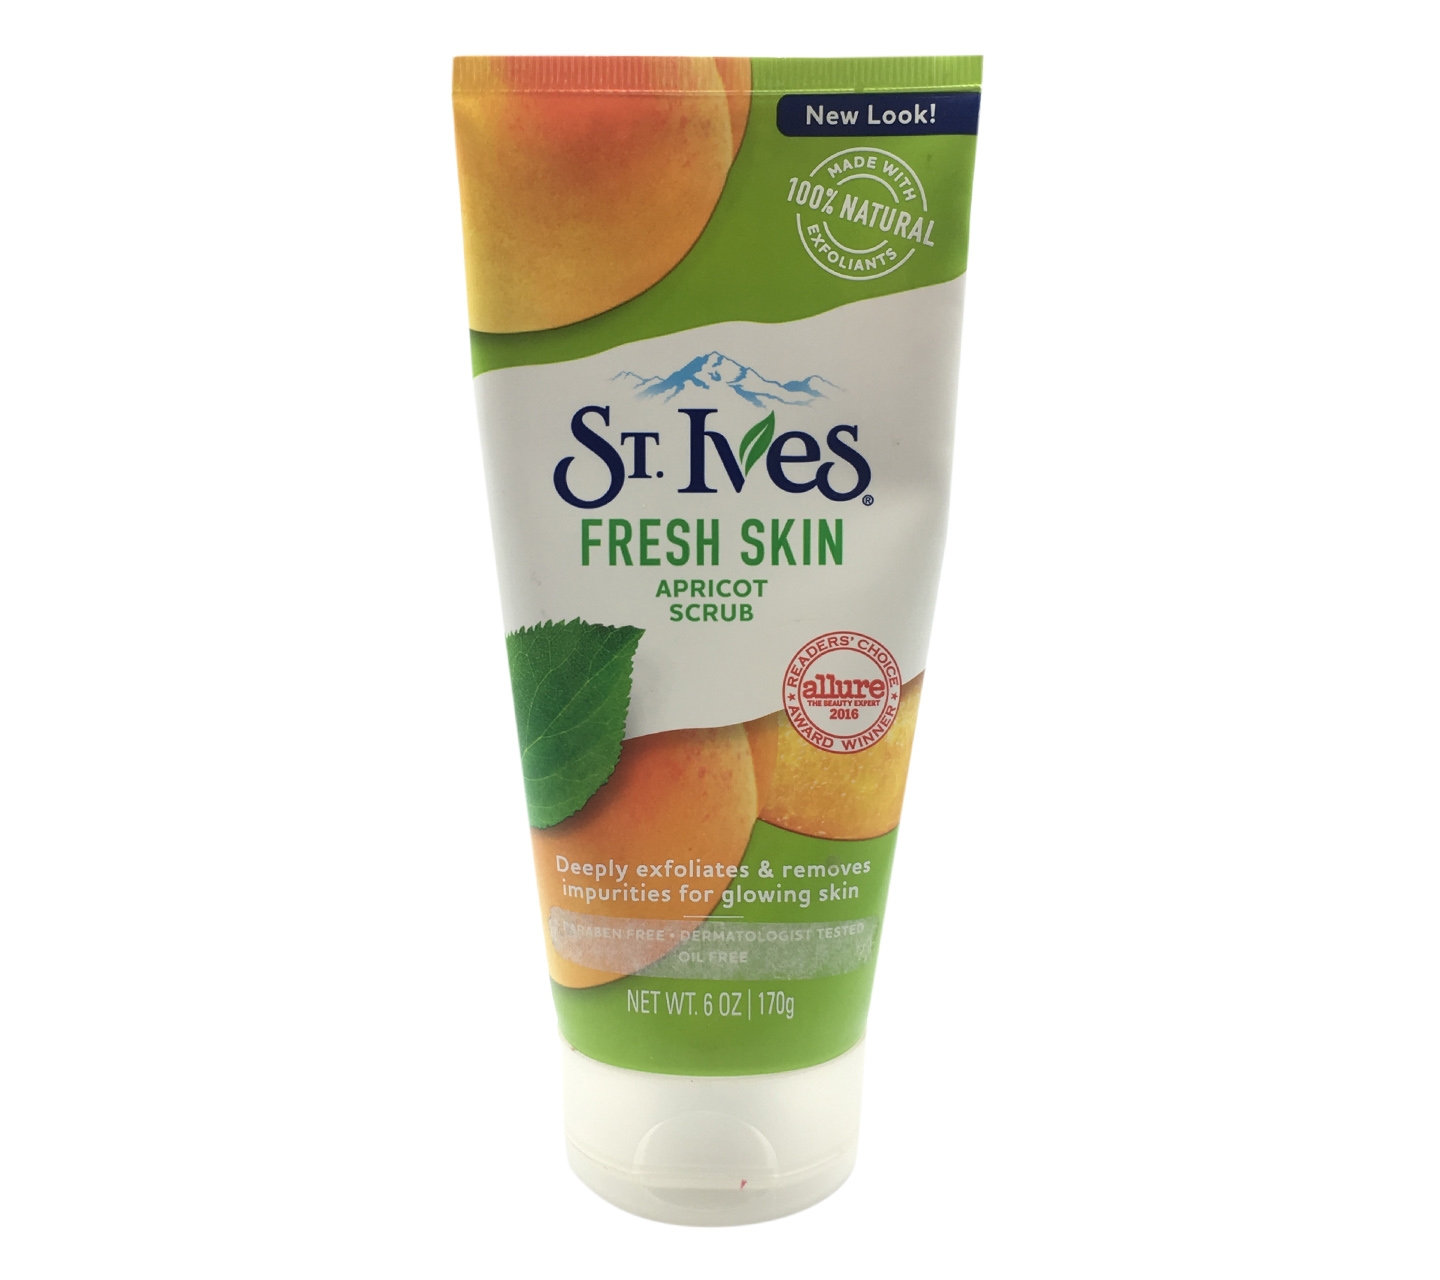 St.Ives Fresh Skin Apricot Scrub Faces